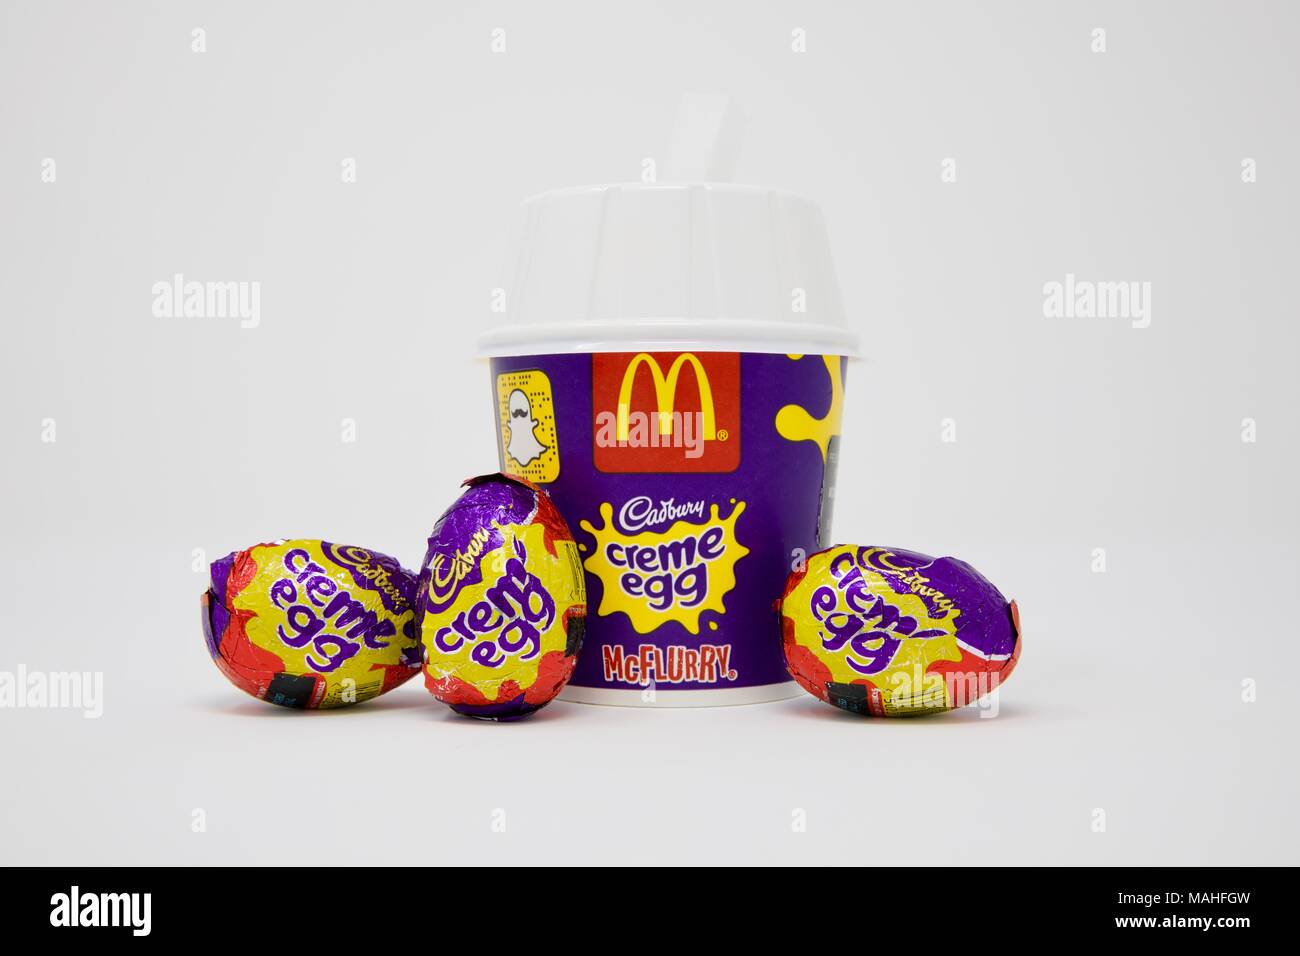 McDonalds Cadbury Creme Egg McFlurry cup with Cadbury Creme Eggs on a white background Stock Photo